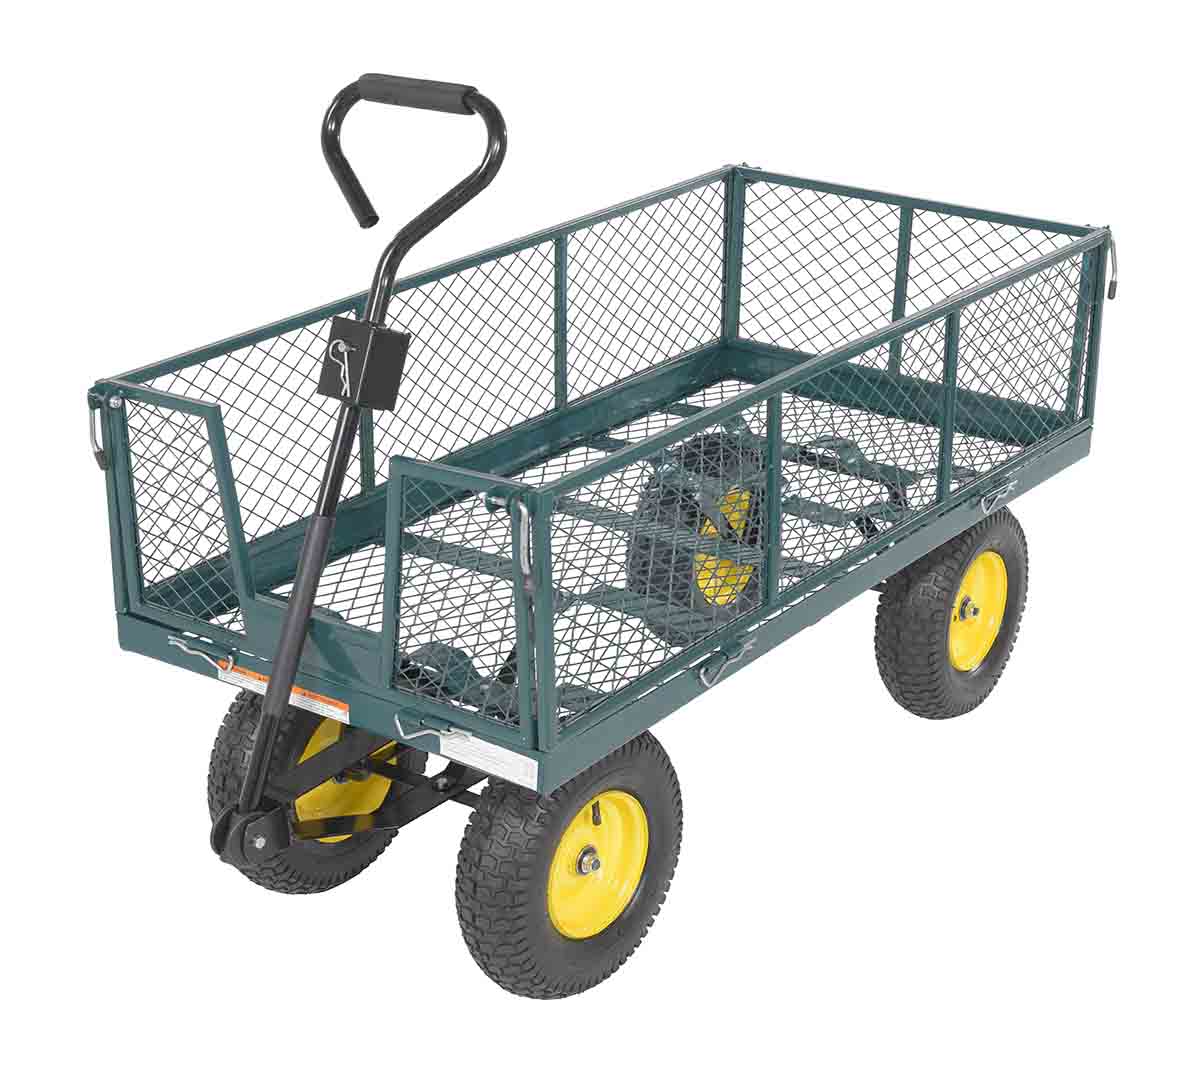 BIG WHEEL CART - Agricultural, Nursery, Farm - 350 Lb - 3.5 Cubic Ft  Capacity